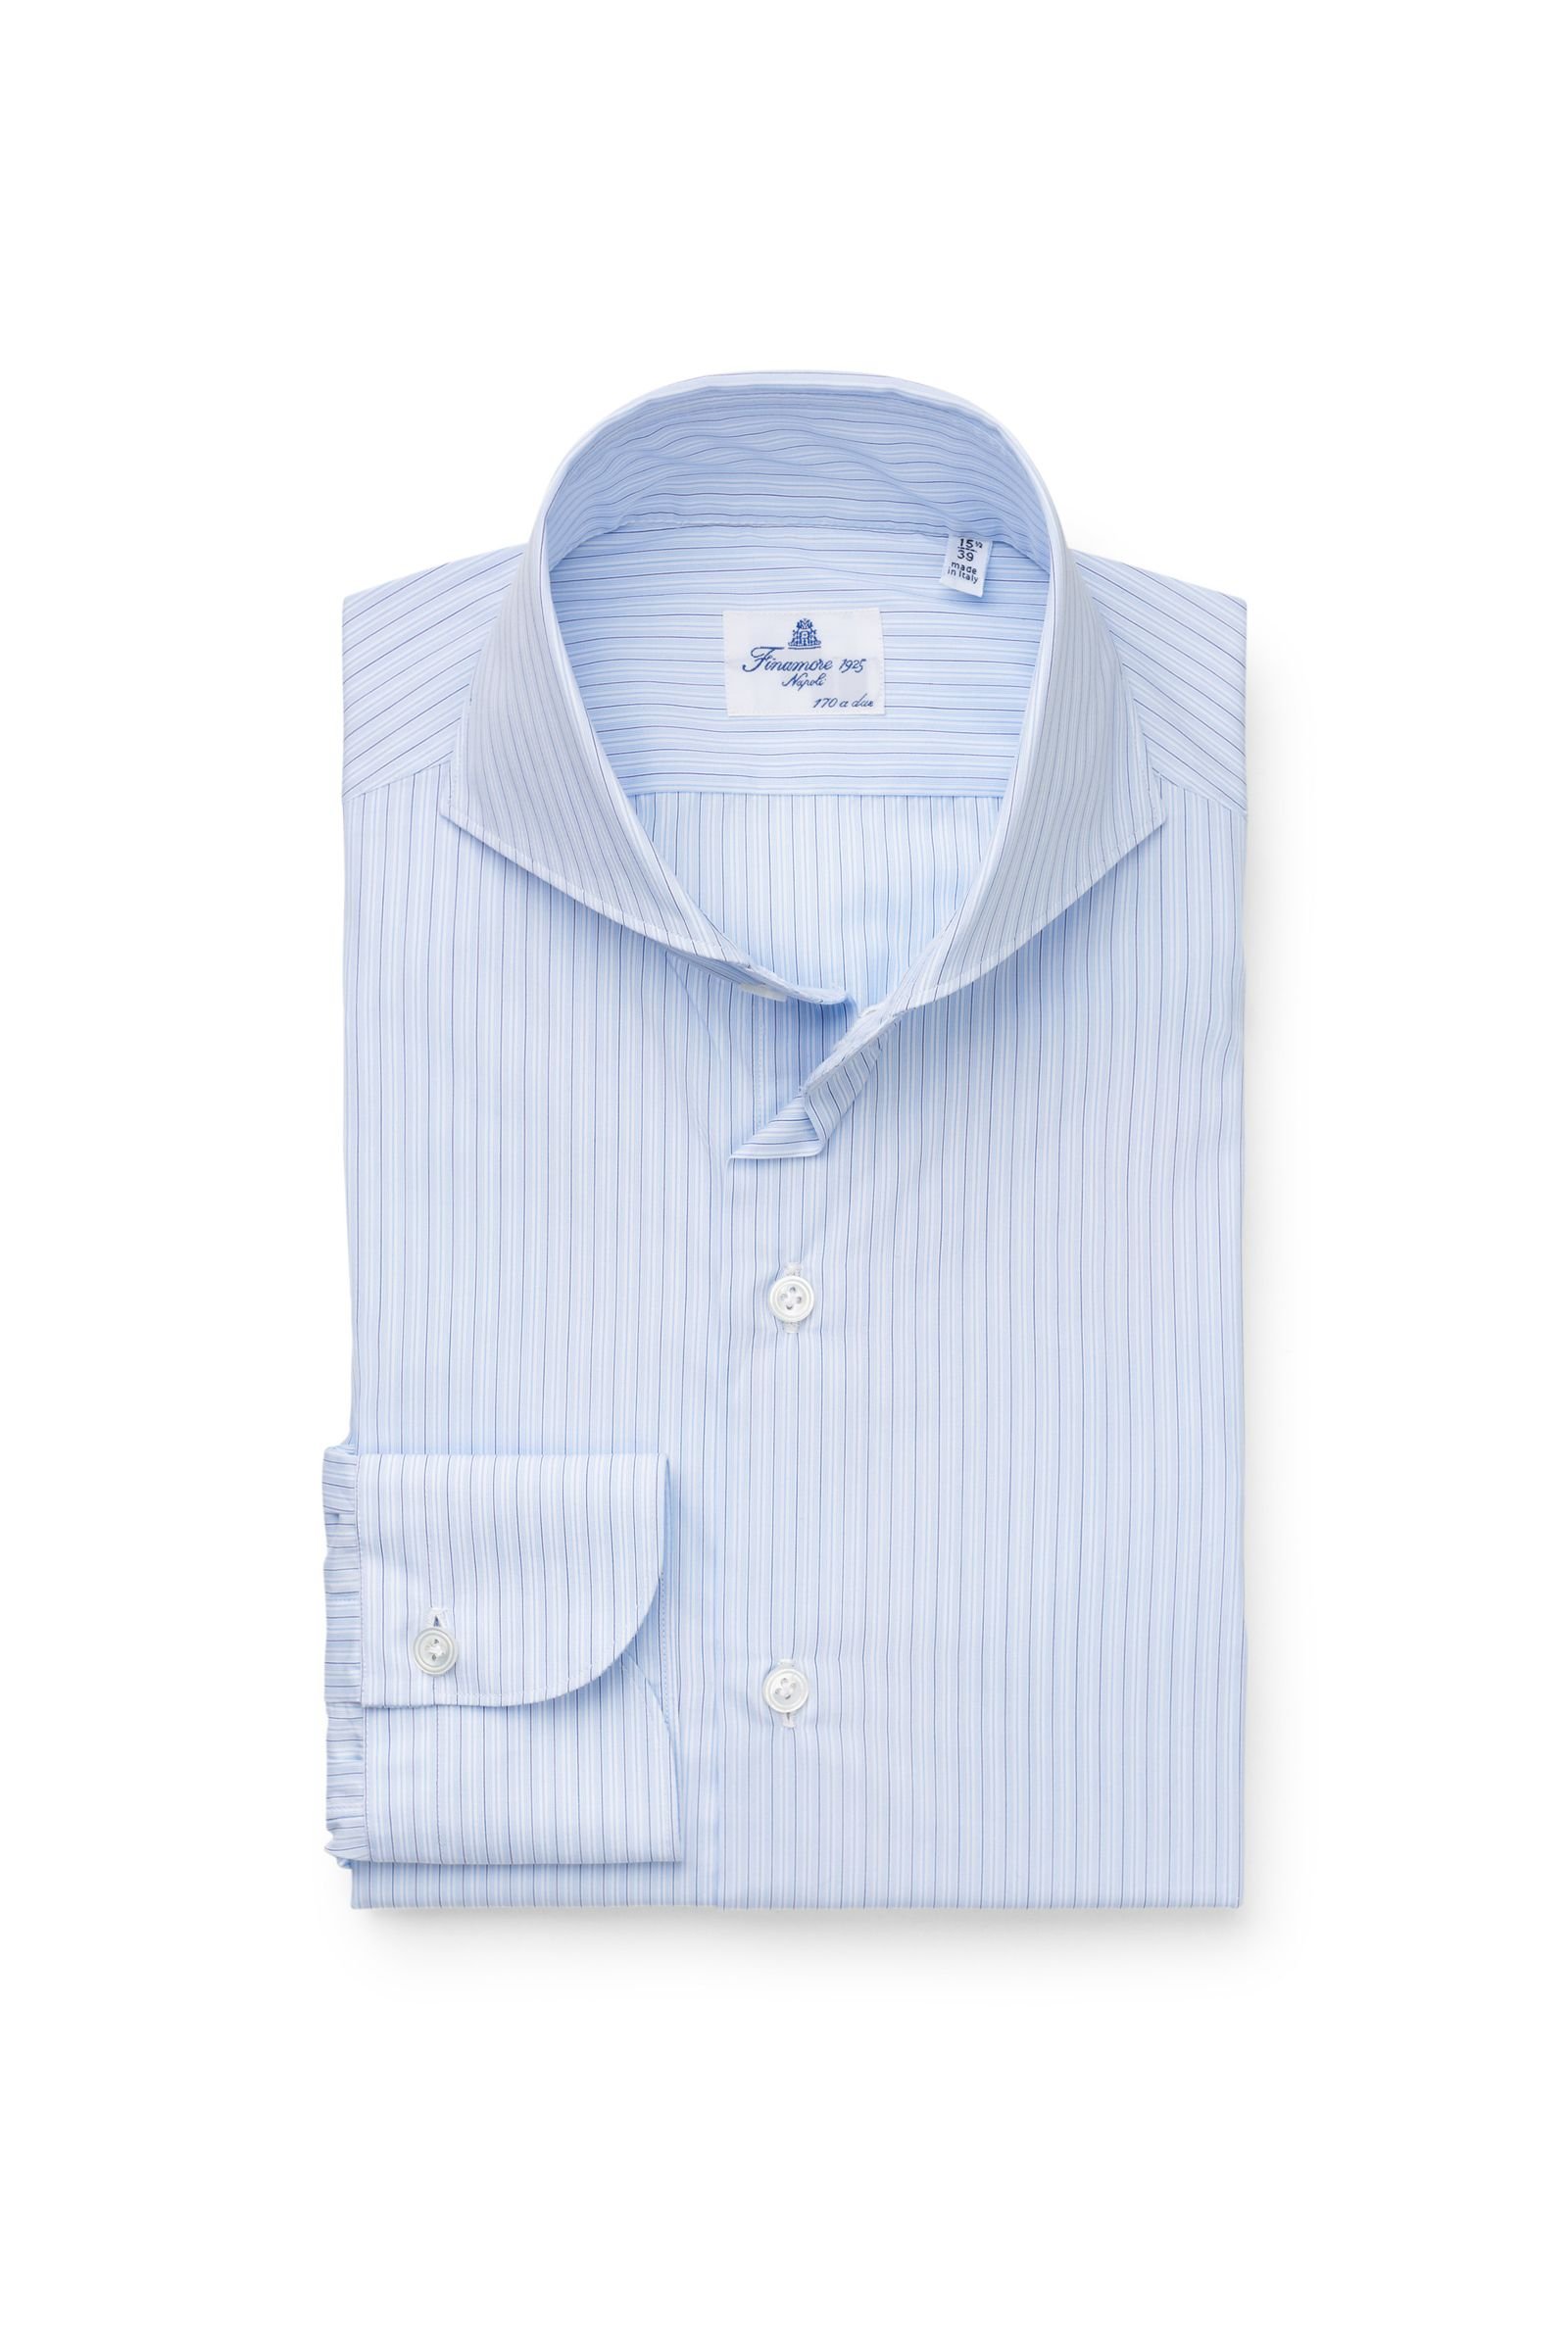 Business shirt 'Sergio Milano' shark collar pastel blue striped